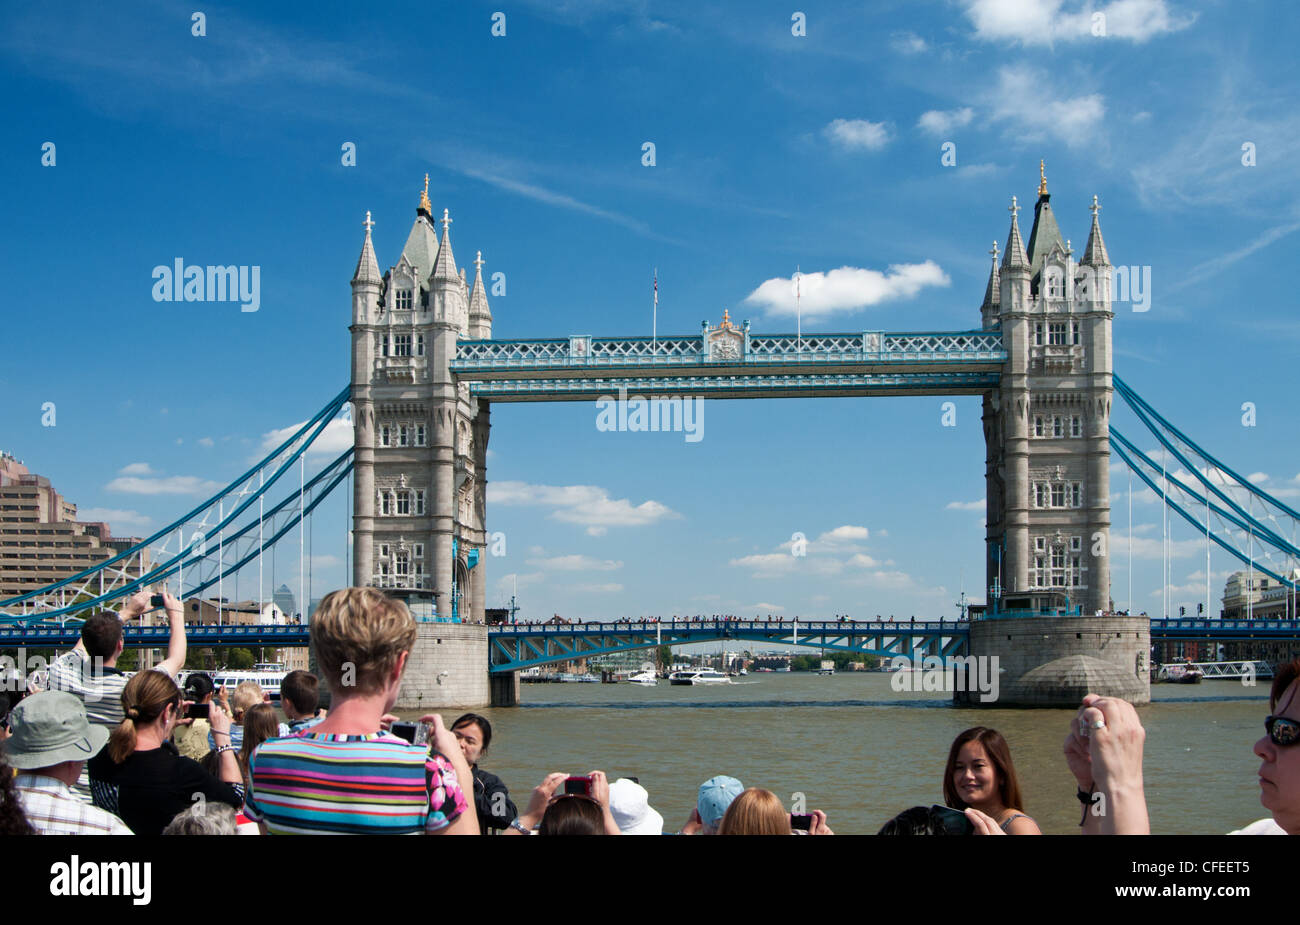 Tourists on Thames cruise taking photos of Tower Bridge, London. Stock Photo